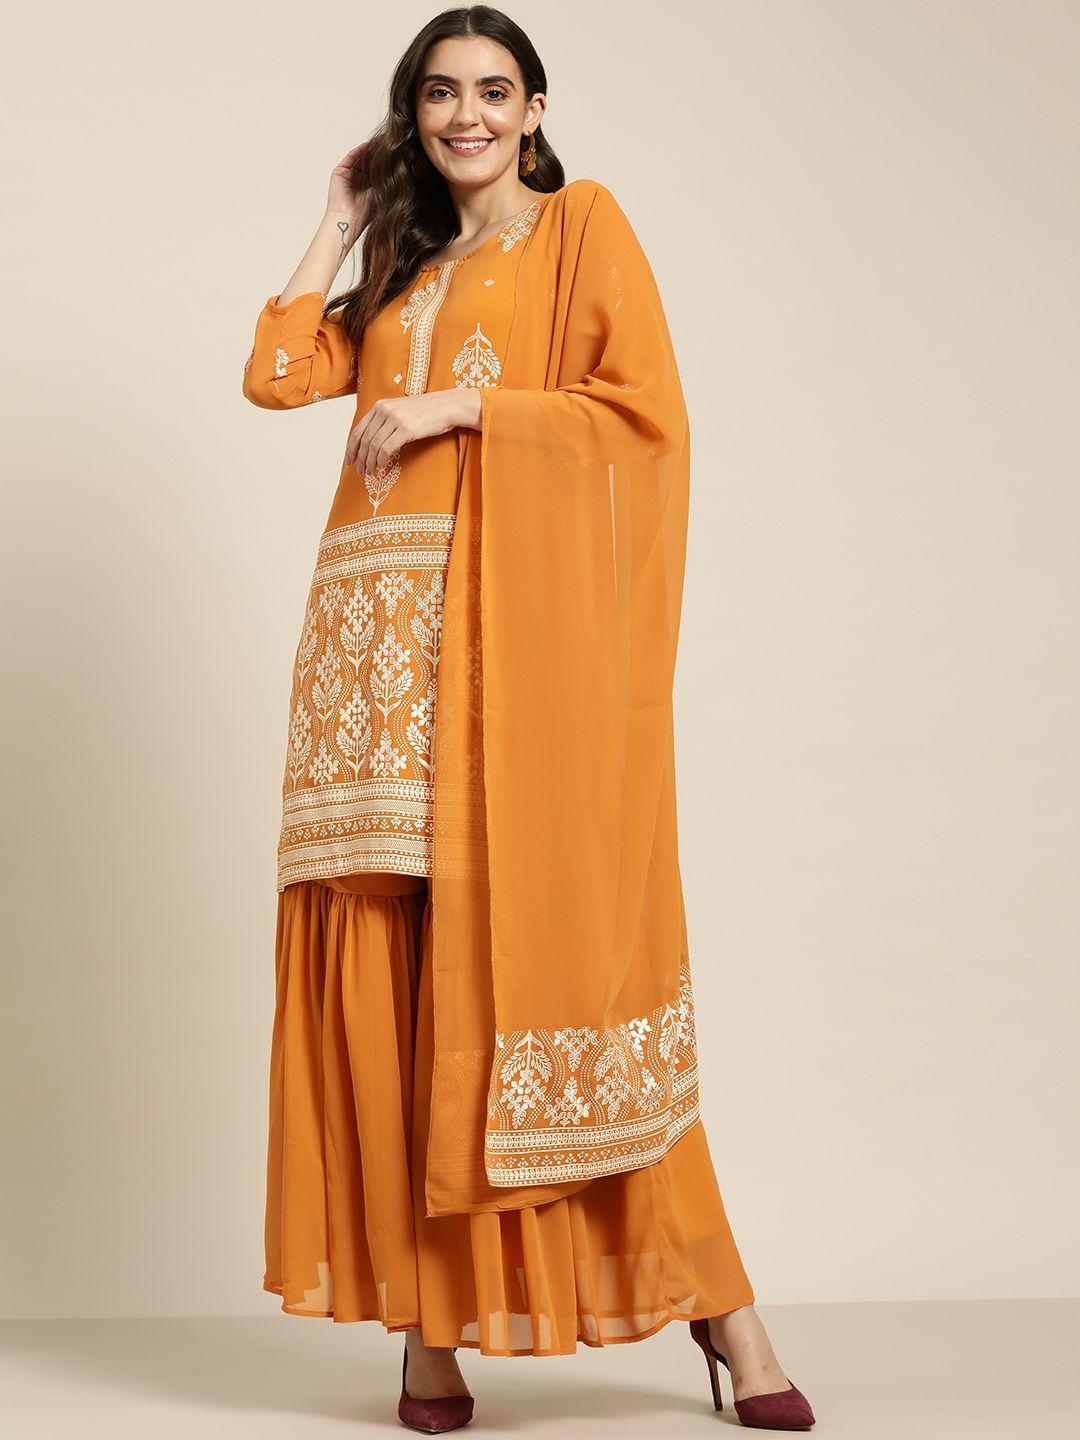 jompers women orange & silver ethnic motifs foil printed straight kurta sharara dupatta